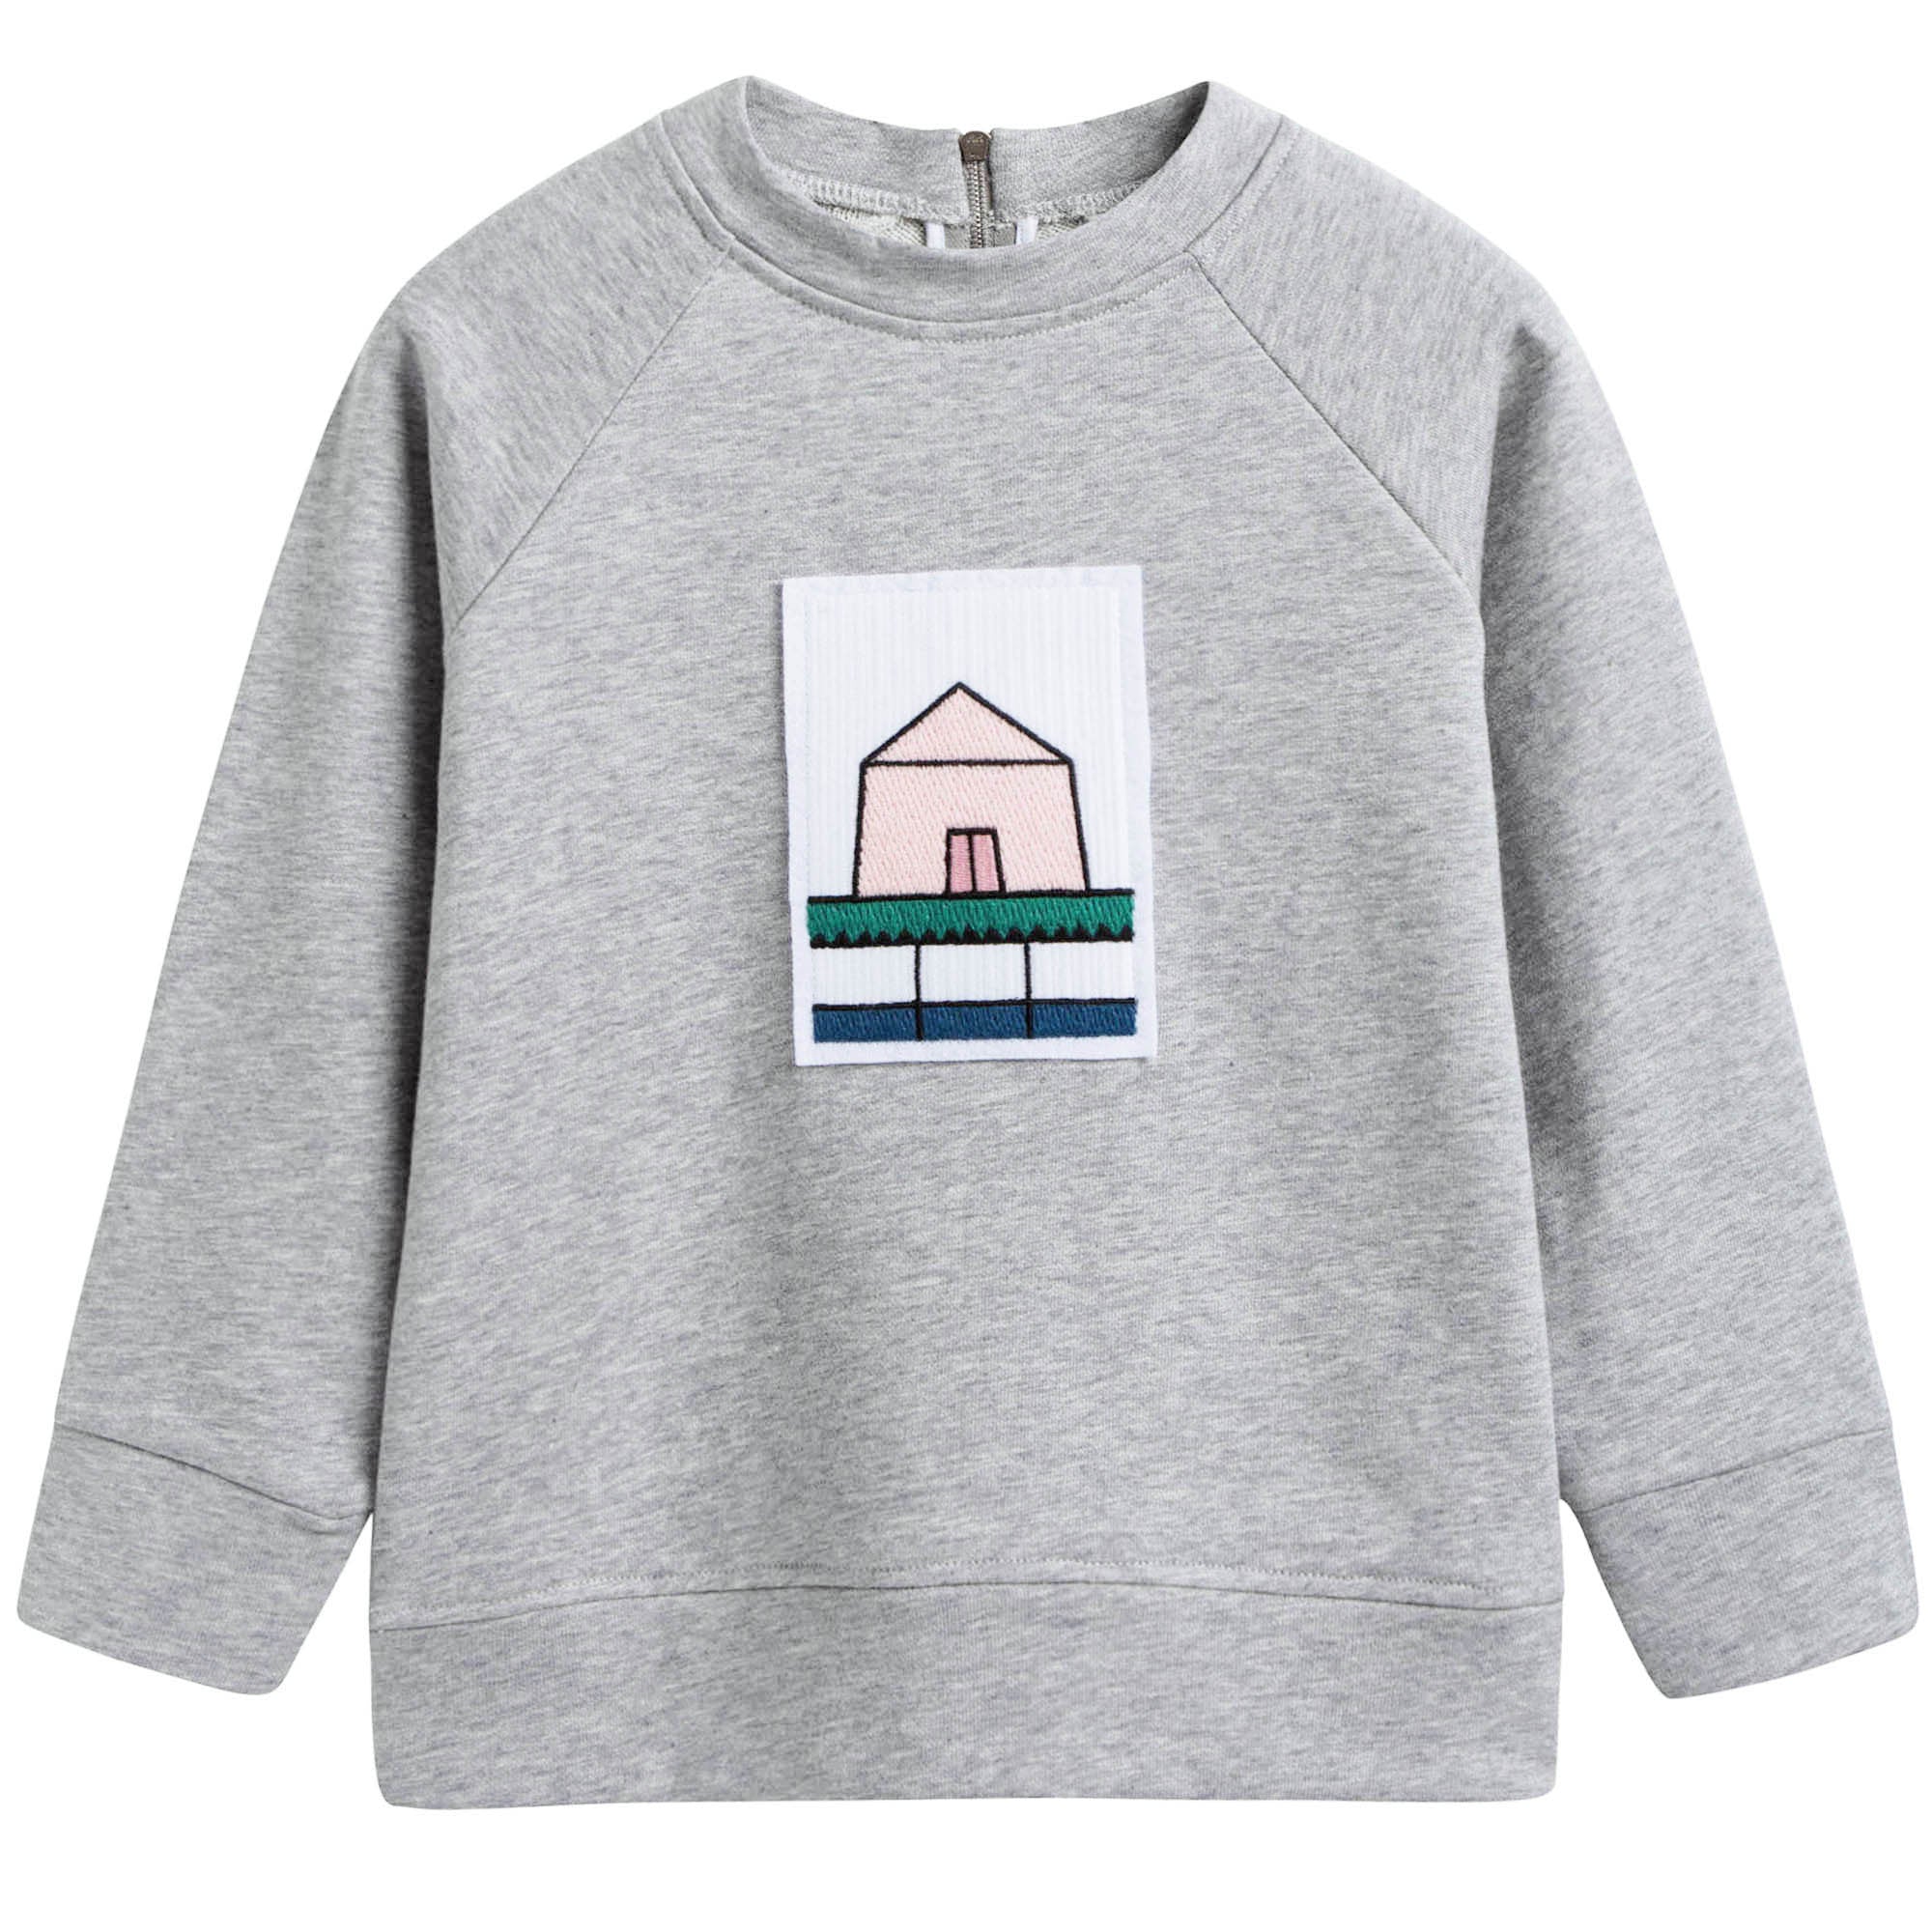 Girls Grey House Printed Cotton Sweatshirt